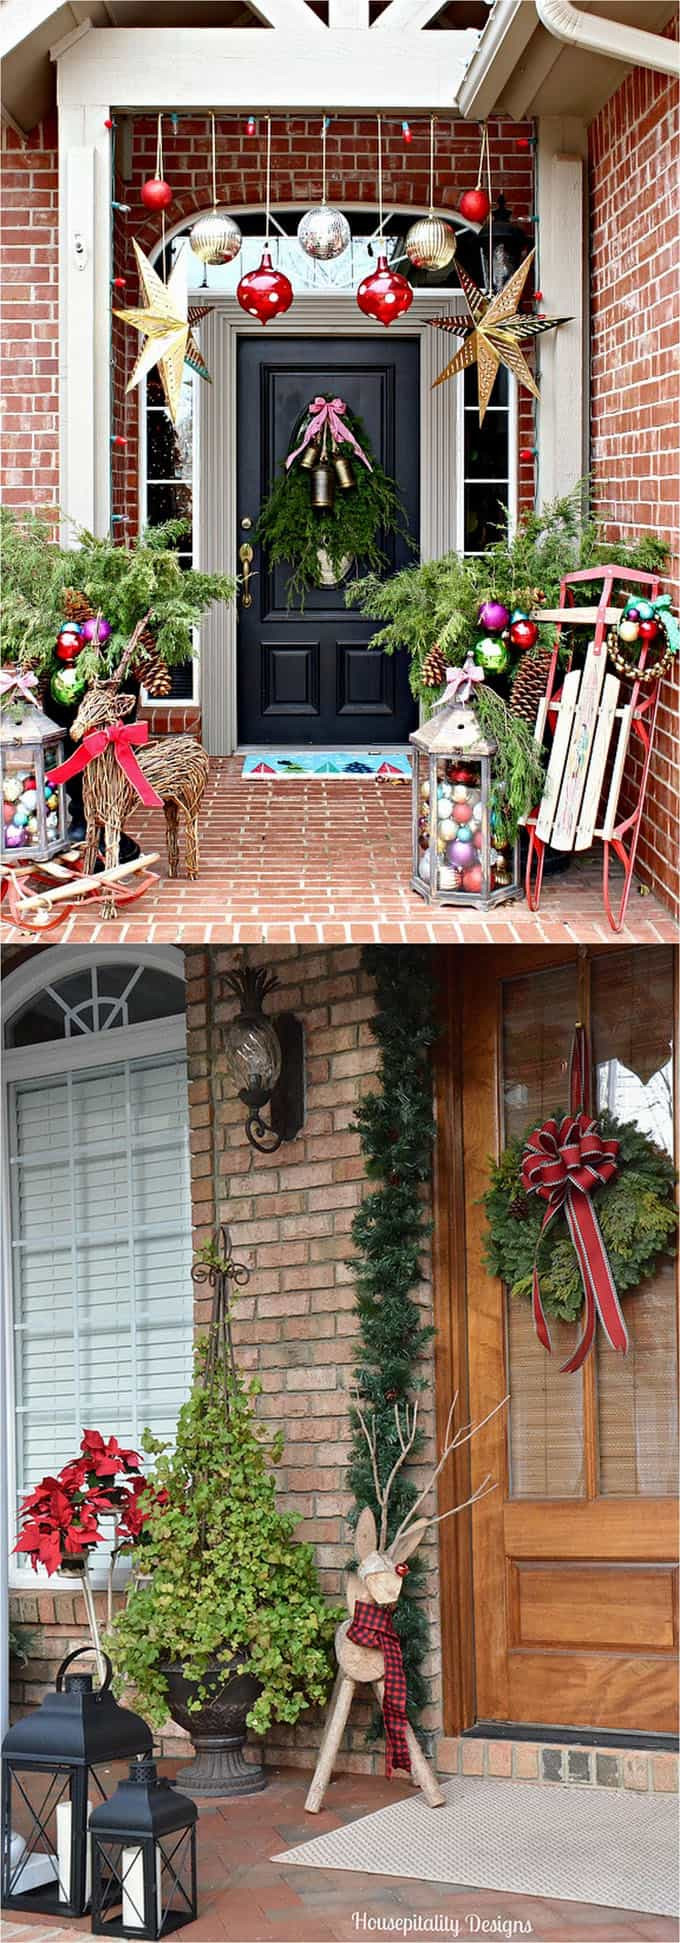 Best ideas about DIY Outdoor Christmas Decor
. Save or Pin Gorgeous Outdoor Christmas Decorations 32 Best Ideas Now.